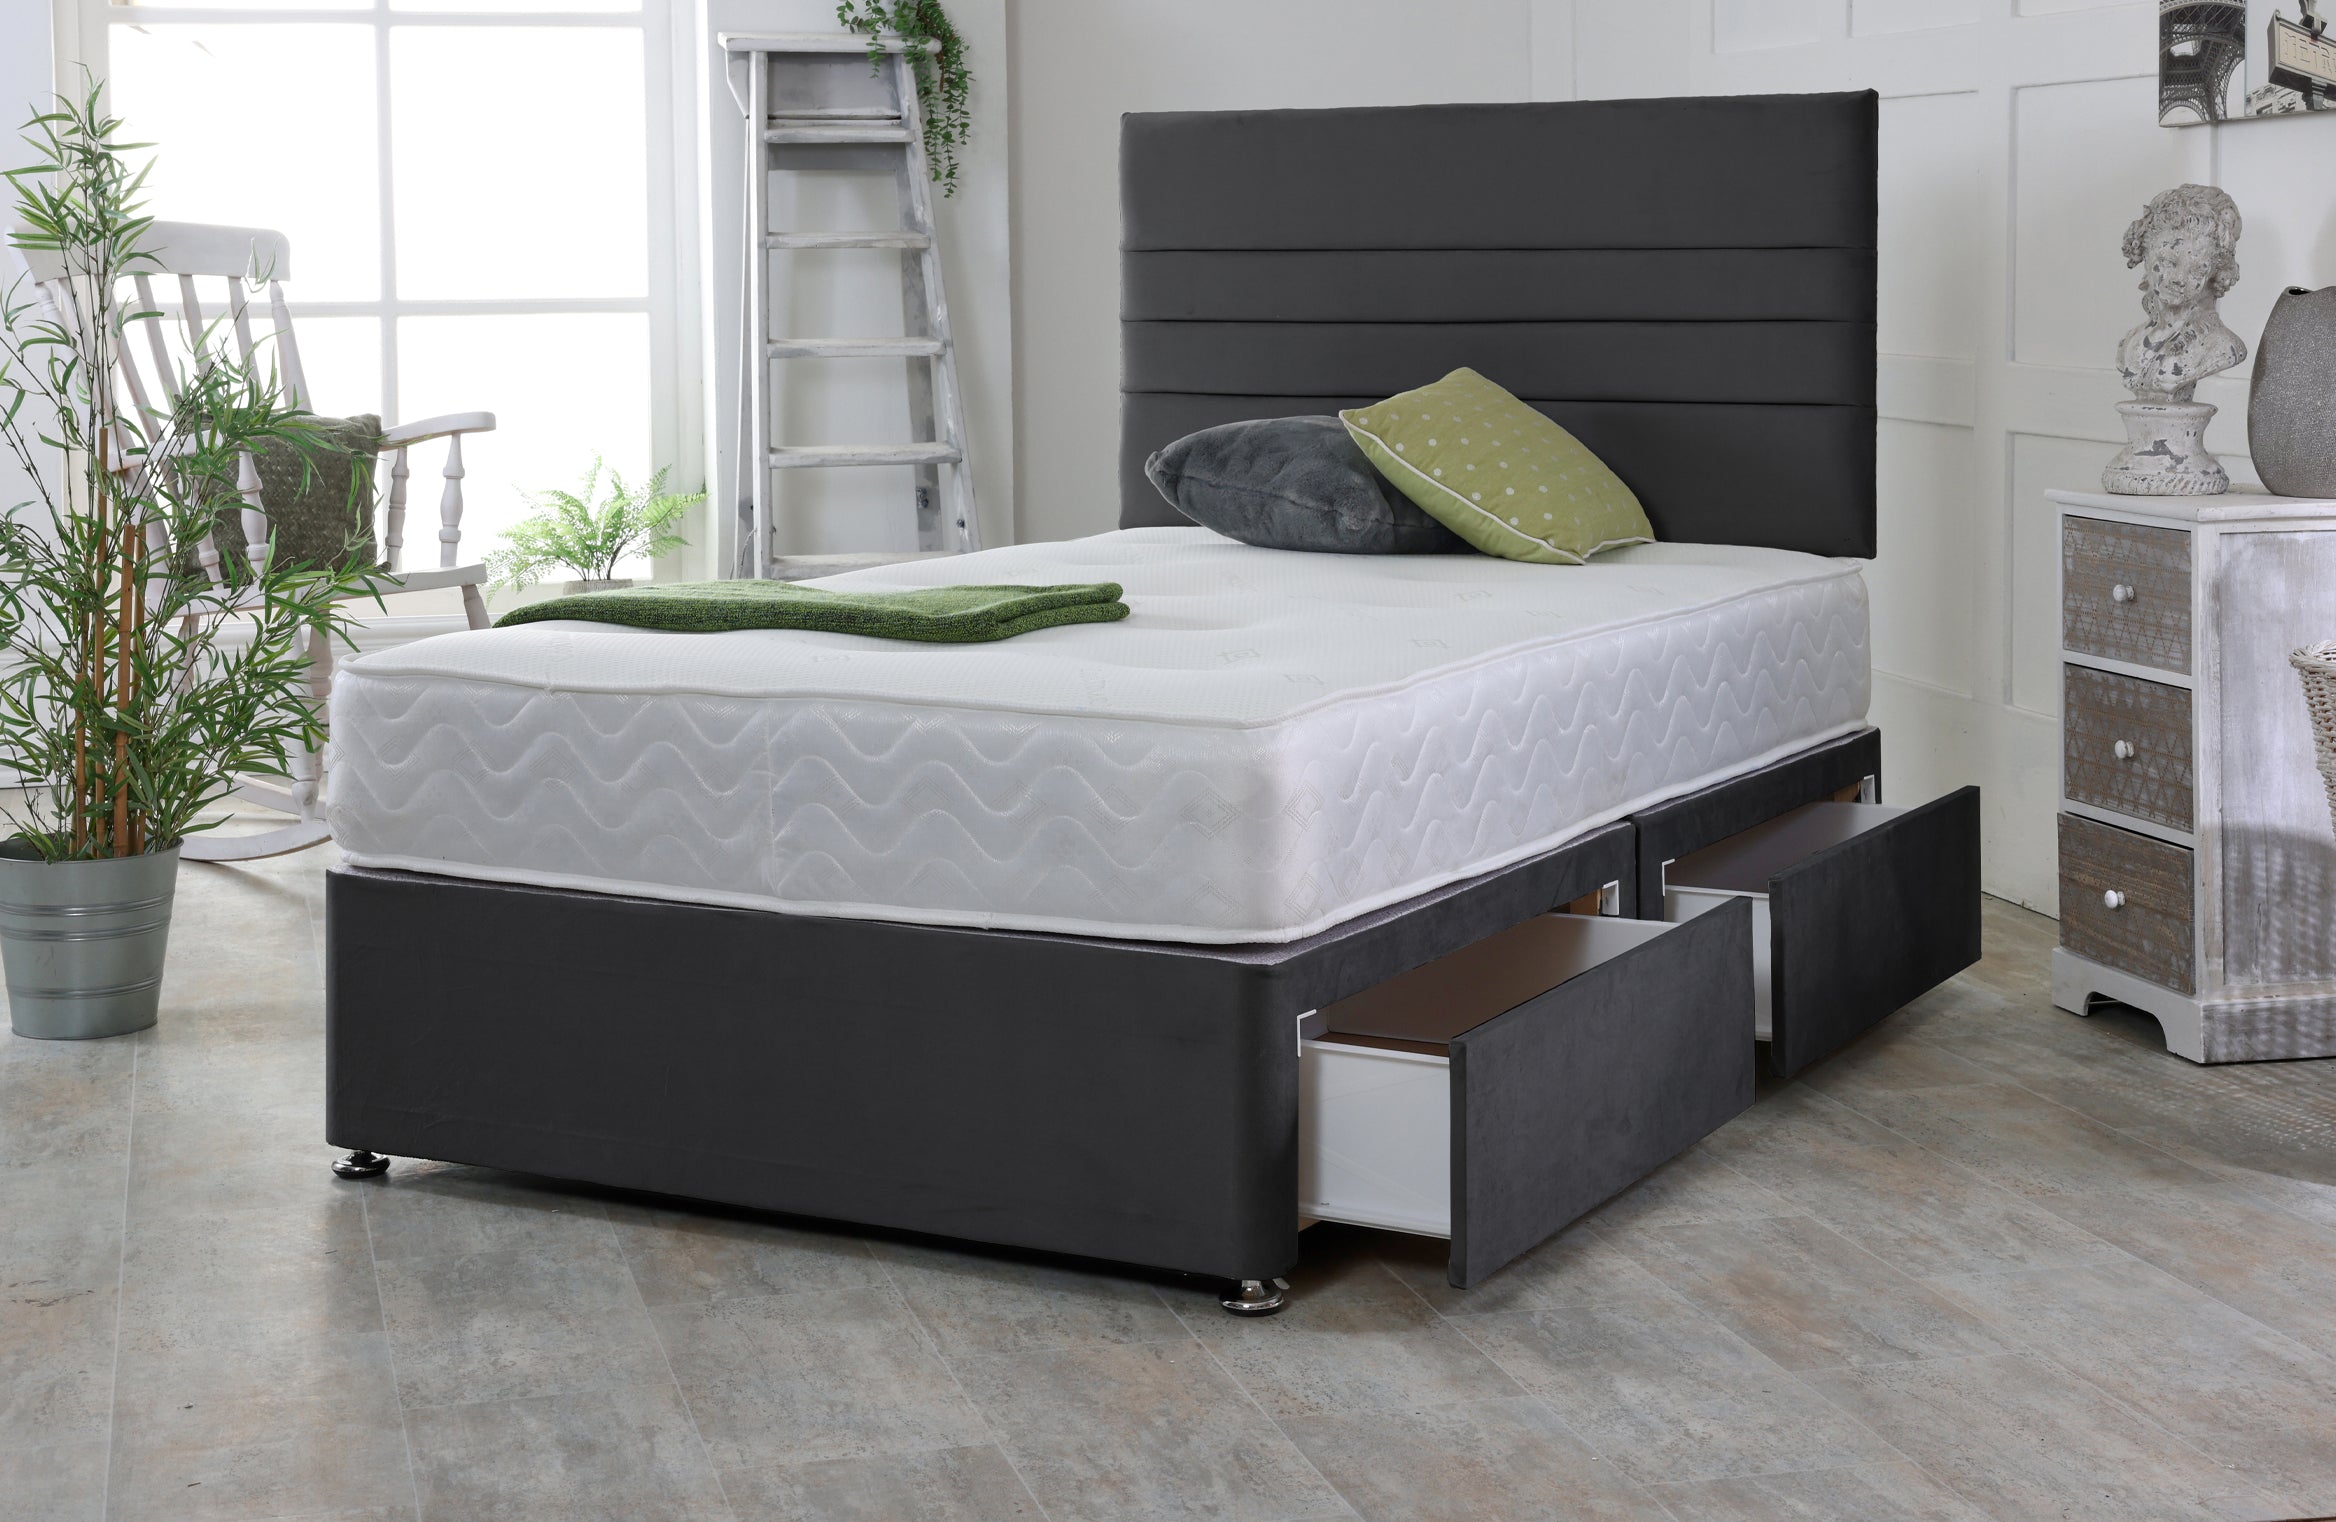 Mint Divan Bed Base Set with Mattress and Headboard